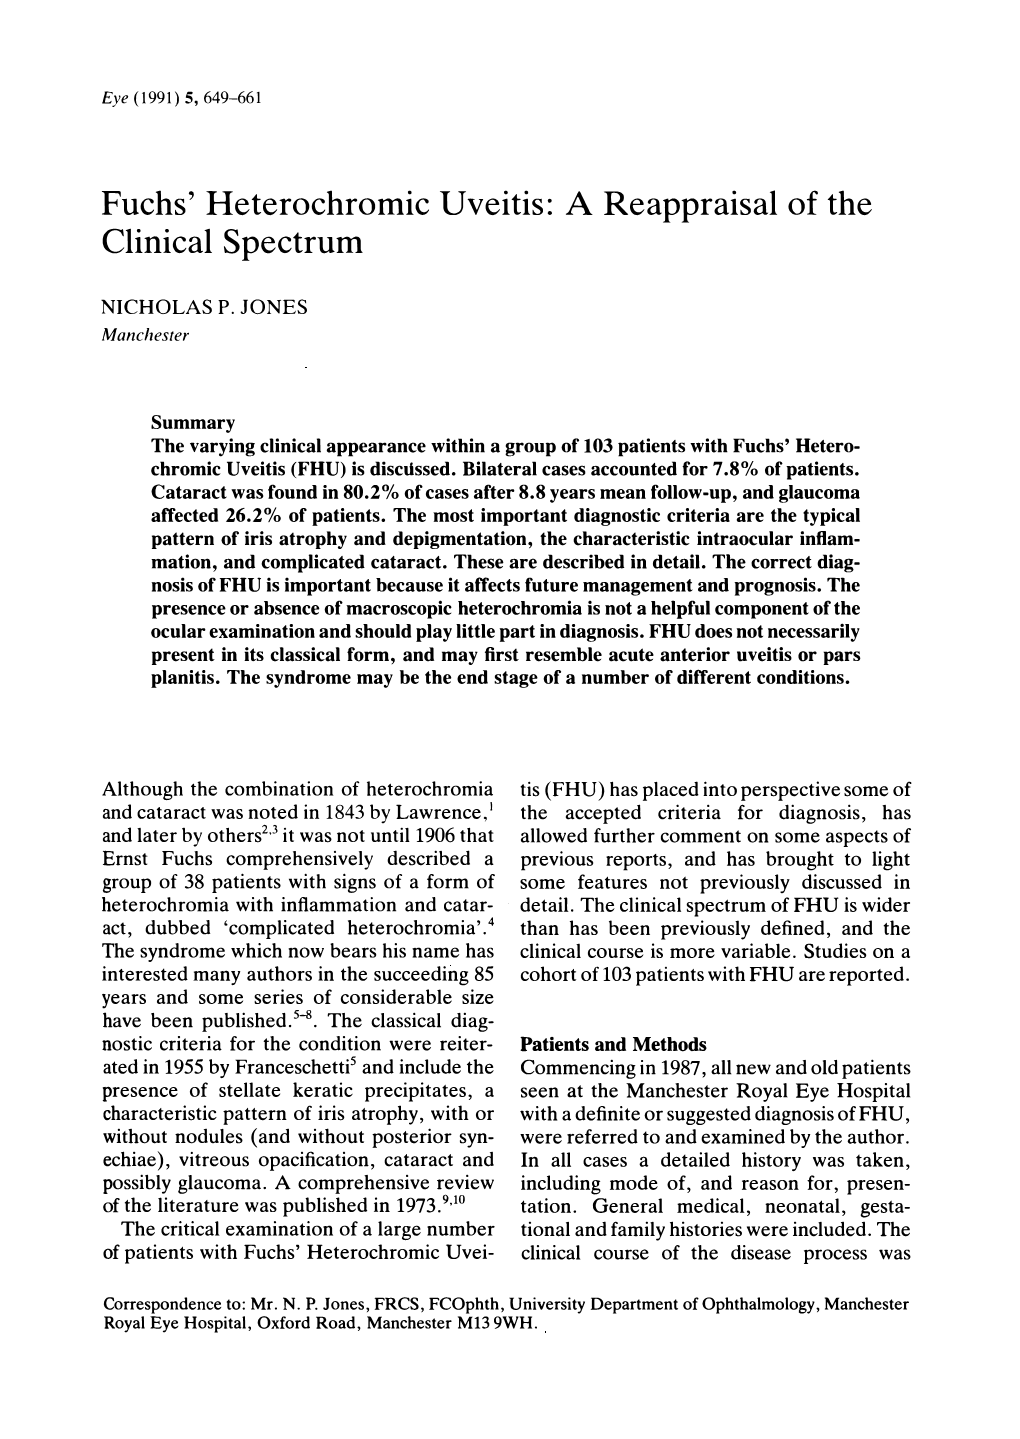 Fuchs' Heterochromic Uveitis: a Reappraisal of the Clinical Spectrum